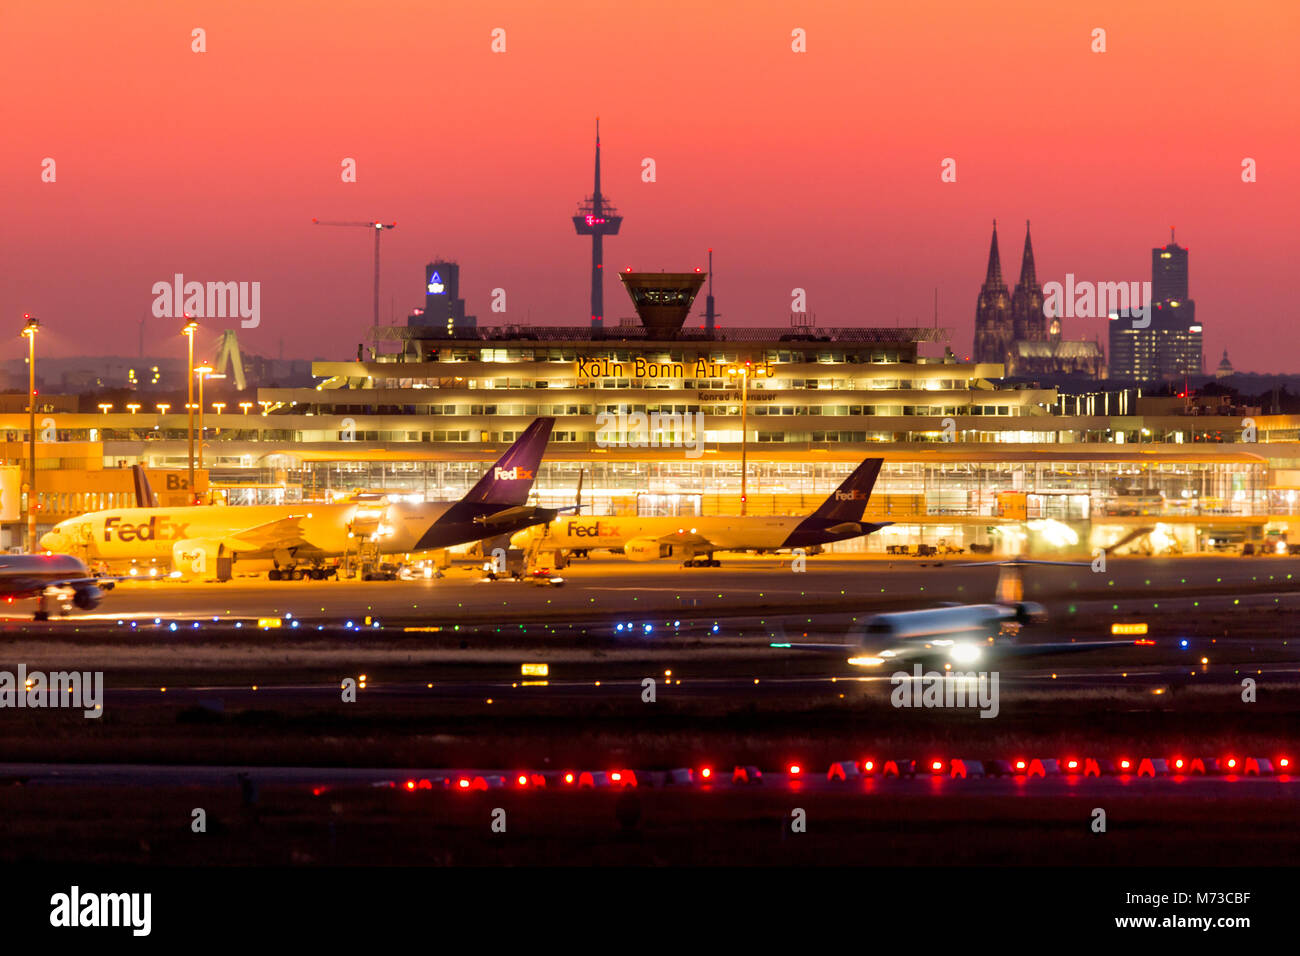 Cologne/Bonn Airport at Dusk Stock Photo